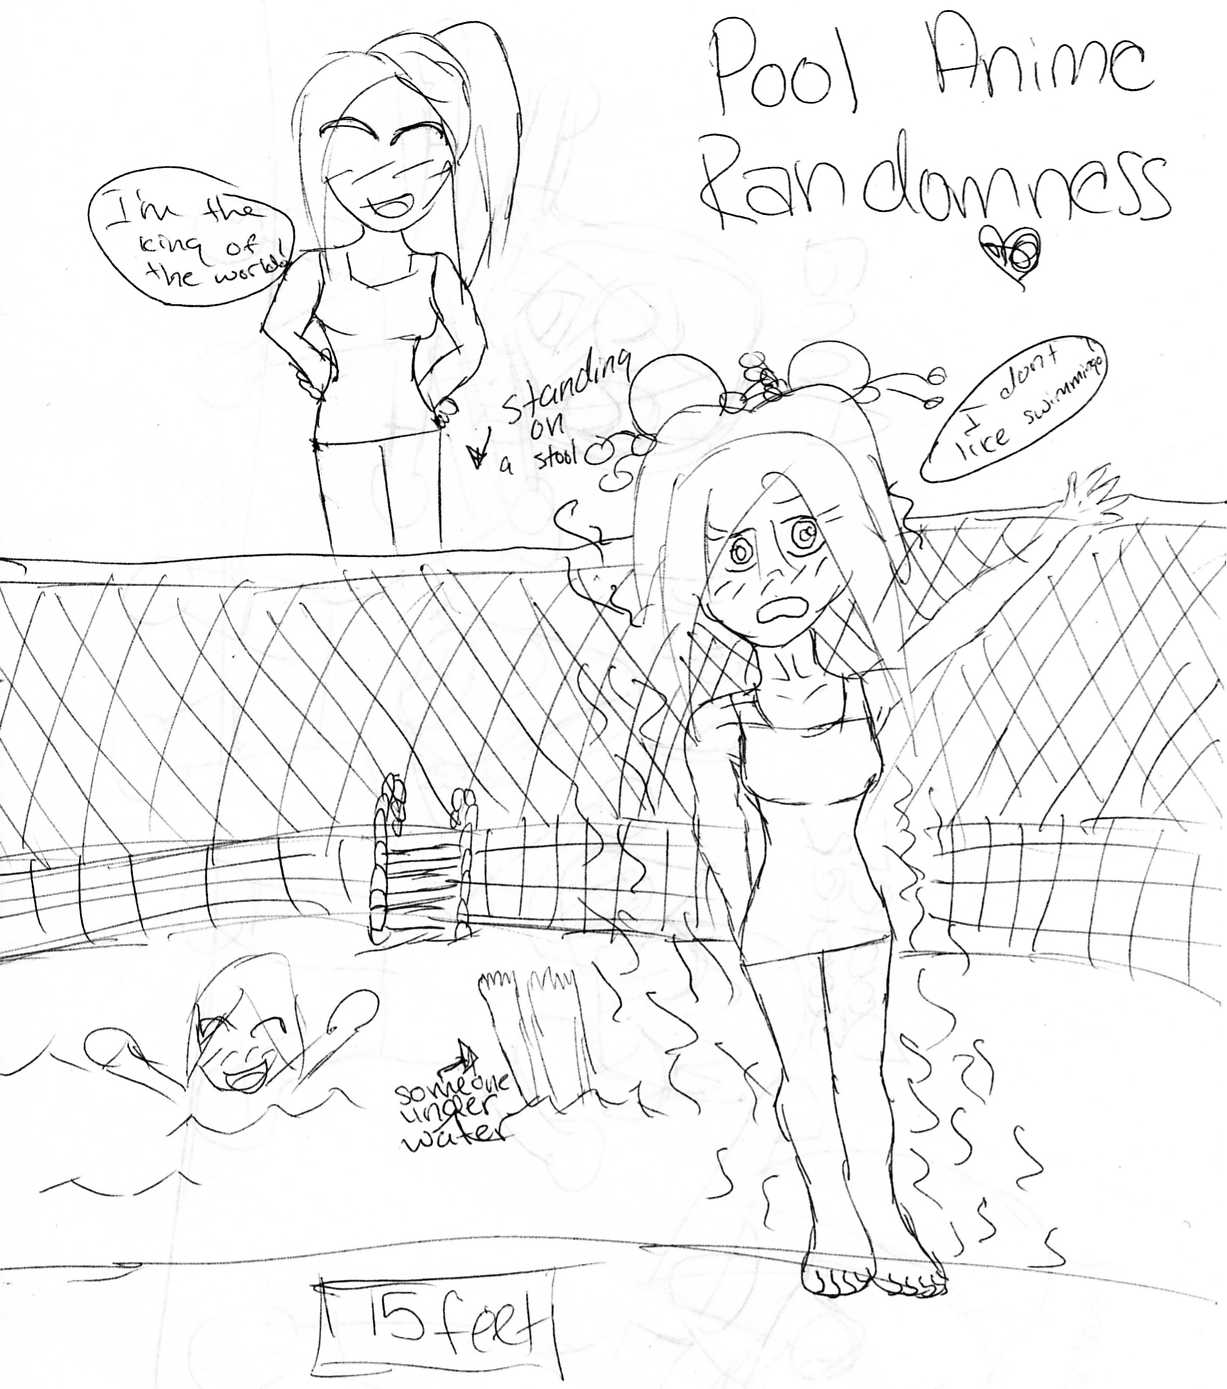 Swimming Pool Anime Randomness by PrincessOfTheTwilight